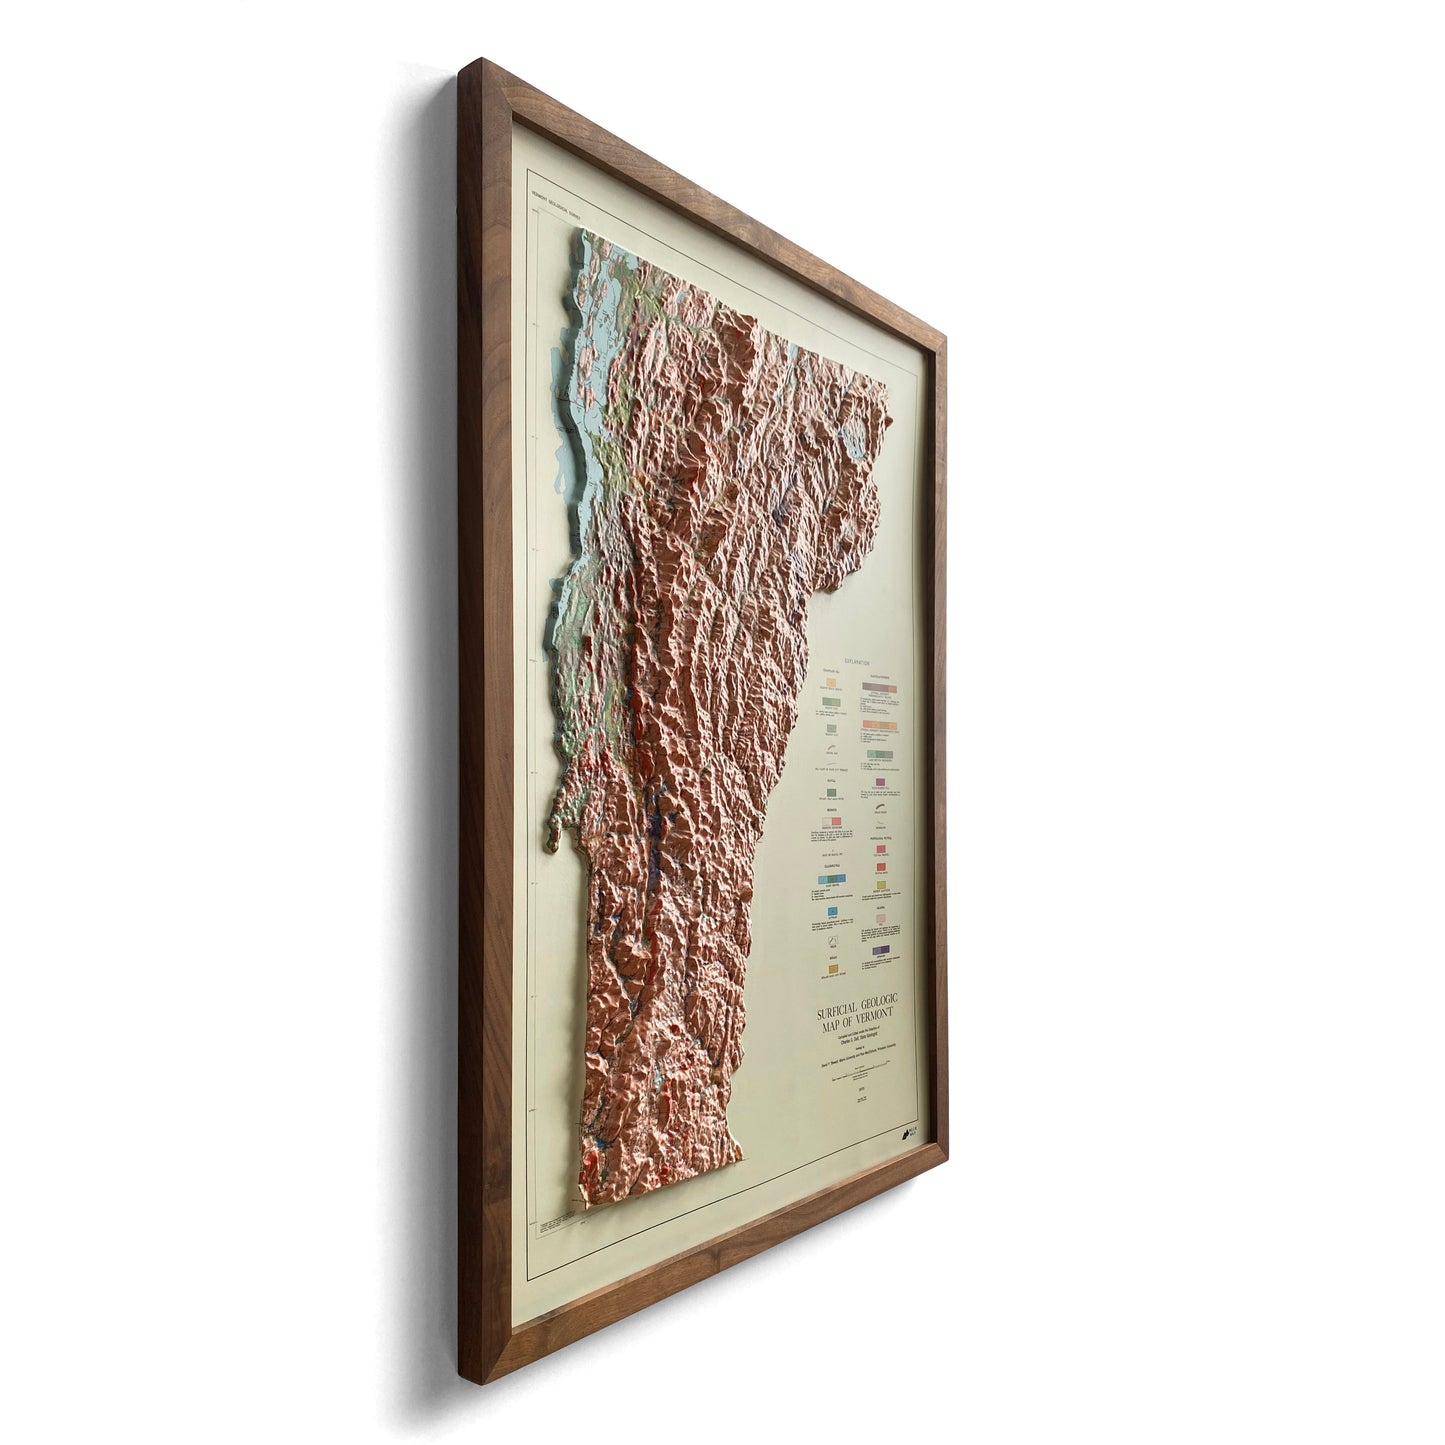 Vermont 1970 3D Raised Relief Map